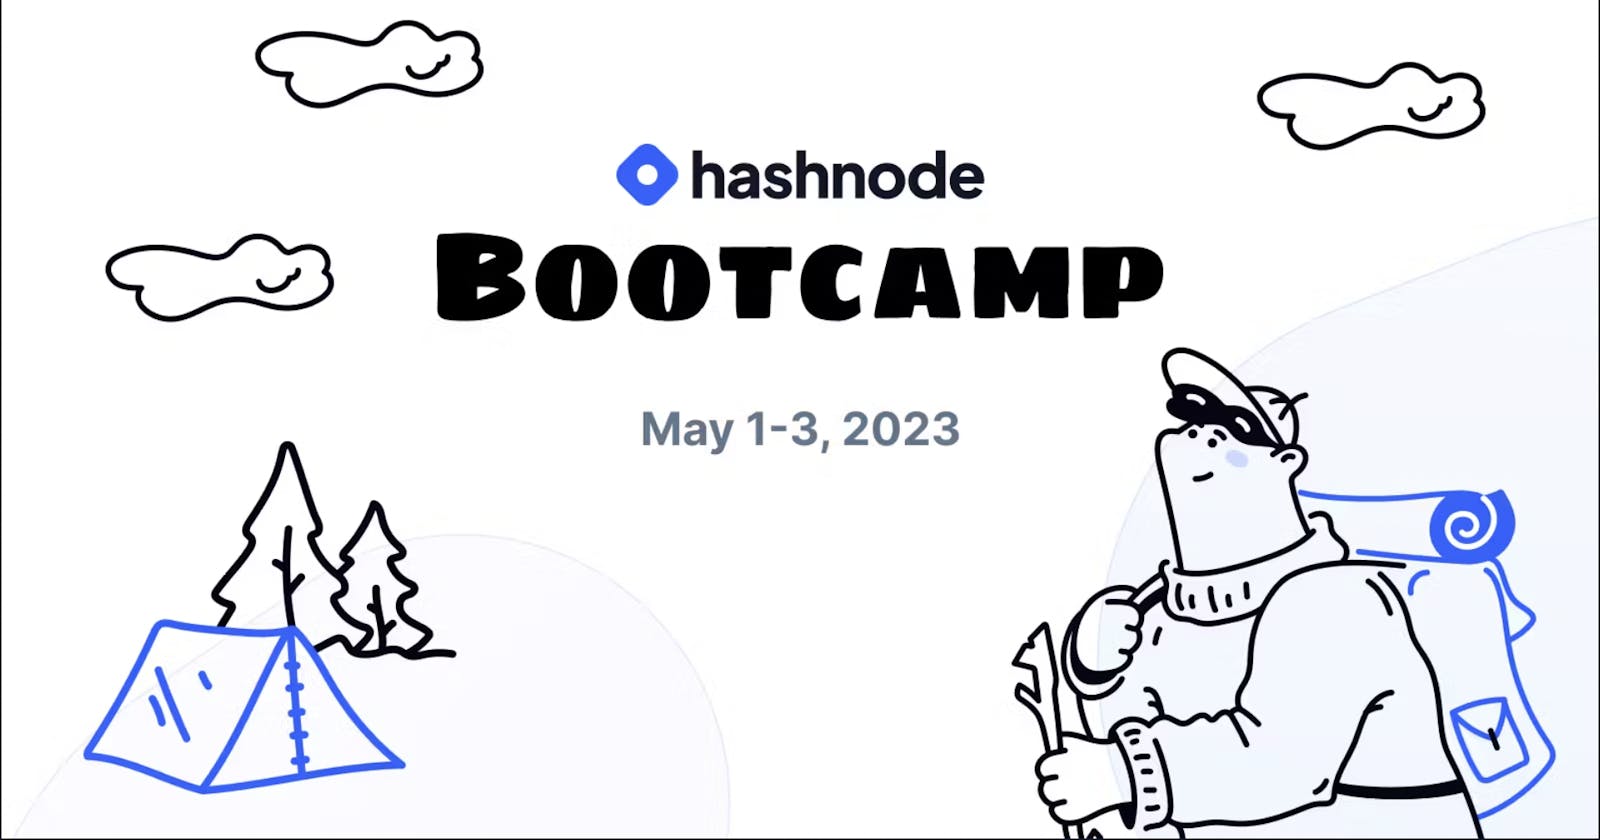 Hashnode Bootcamp: My key takeaways to help technical writers